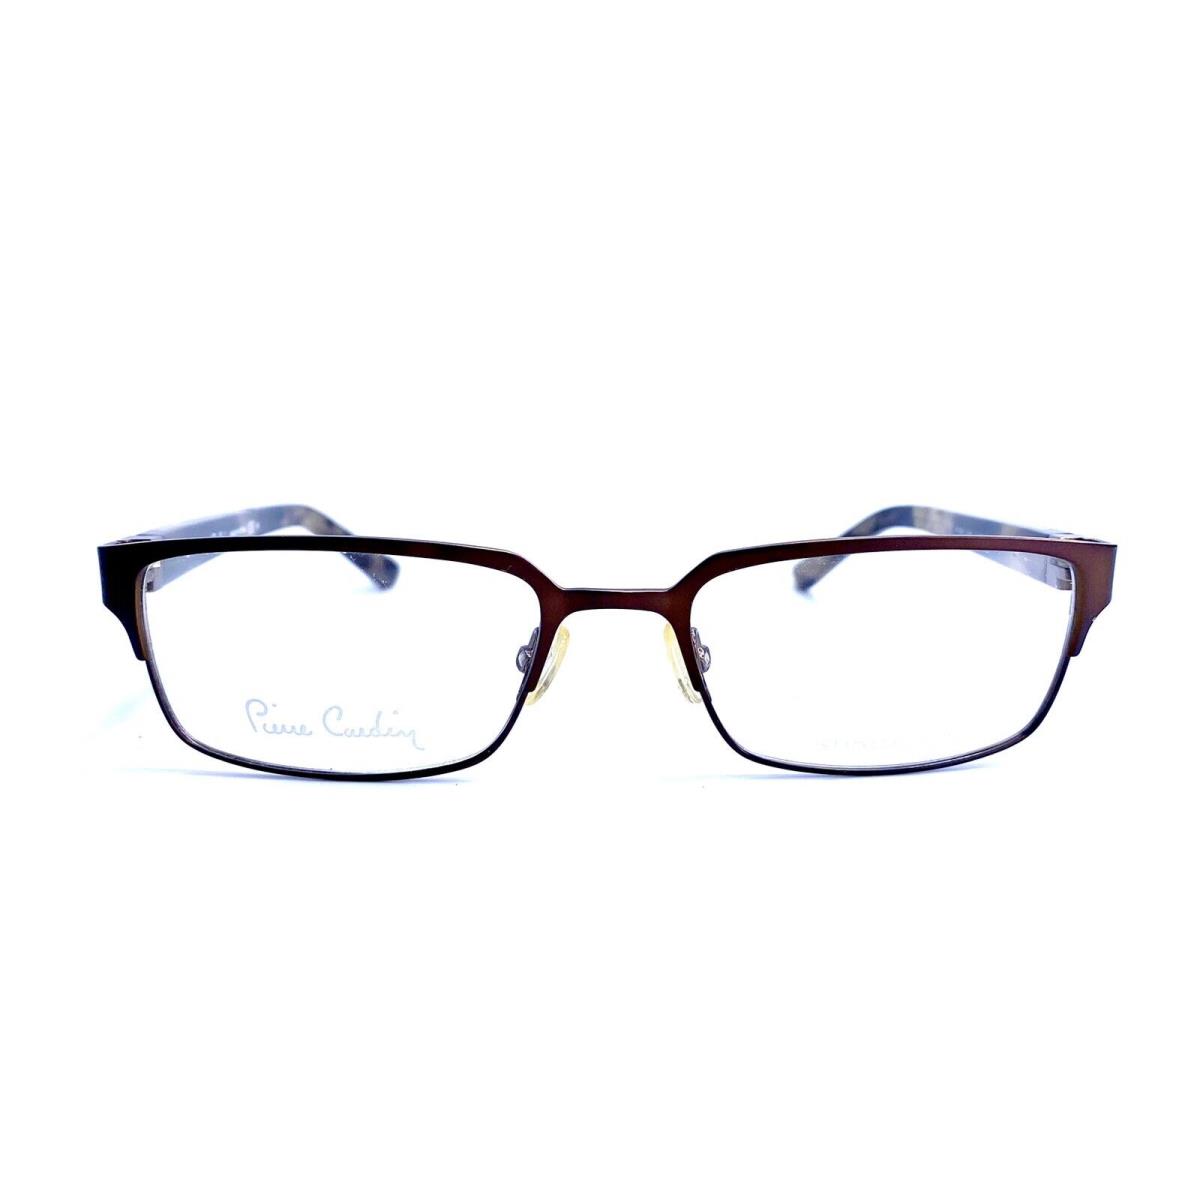 Pierre Cardin Brown Metal Tortoise Rectangular Eyeglasses PC 605 53 18 140